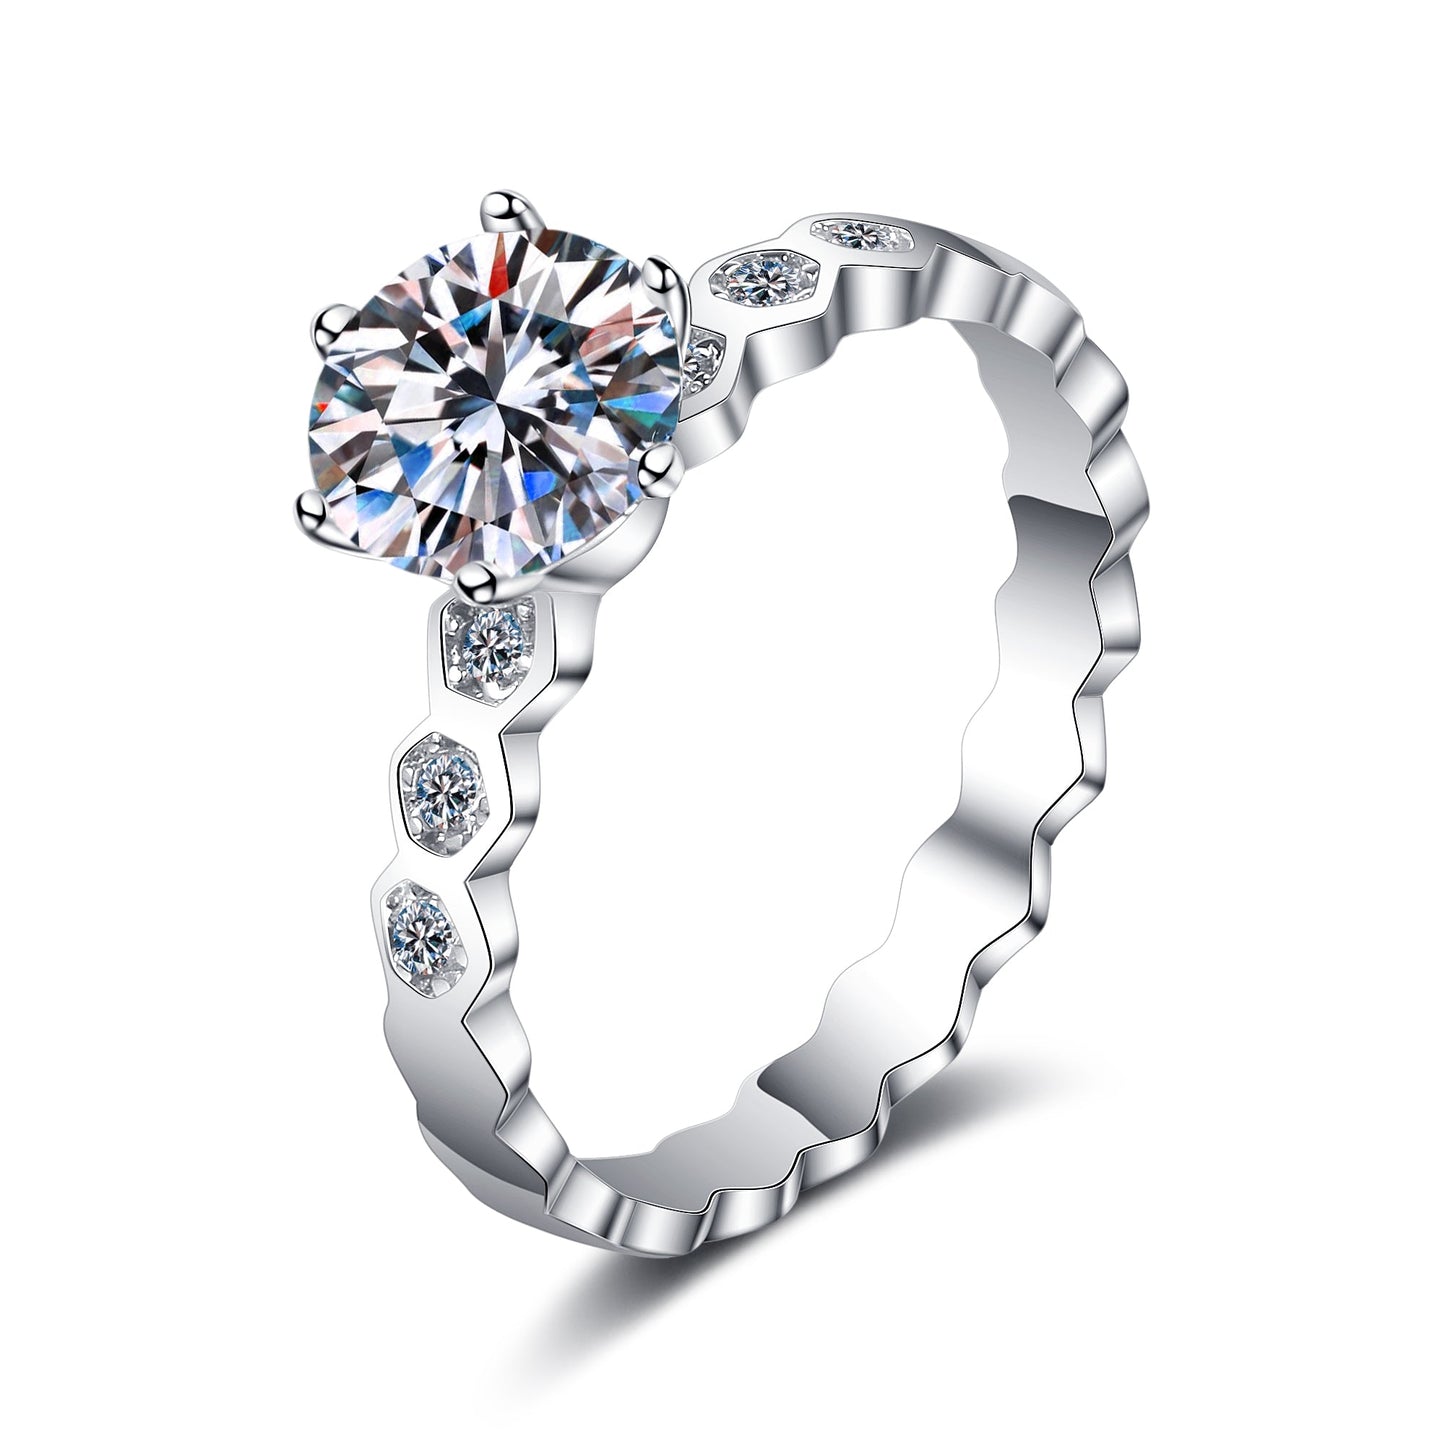 1 CT MOISSANITE Diamond Engagement Solitaire Ring, 925 Silver, Elegant Wedding Ring, the nest, Platinum Plated, Passes Diamond Tester az154 Xaxe.com